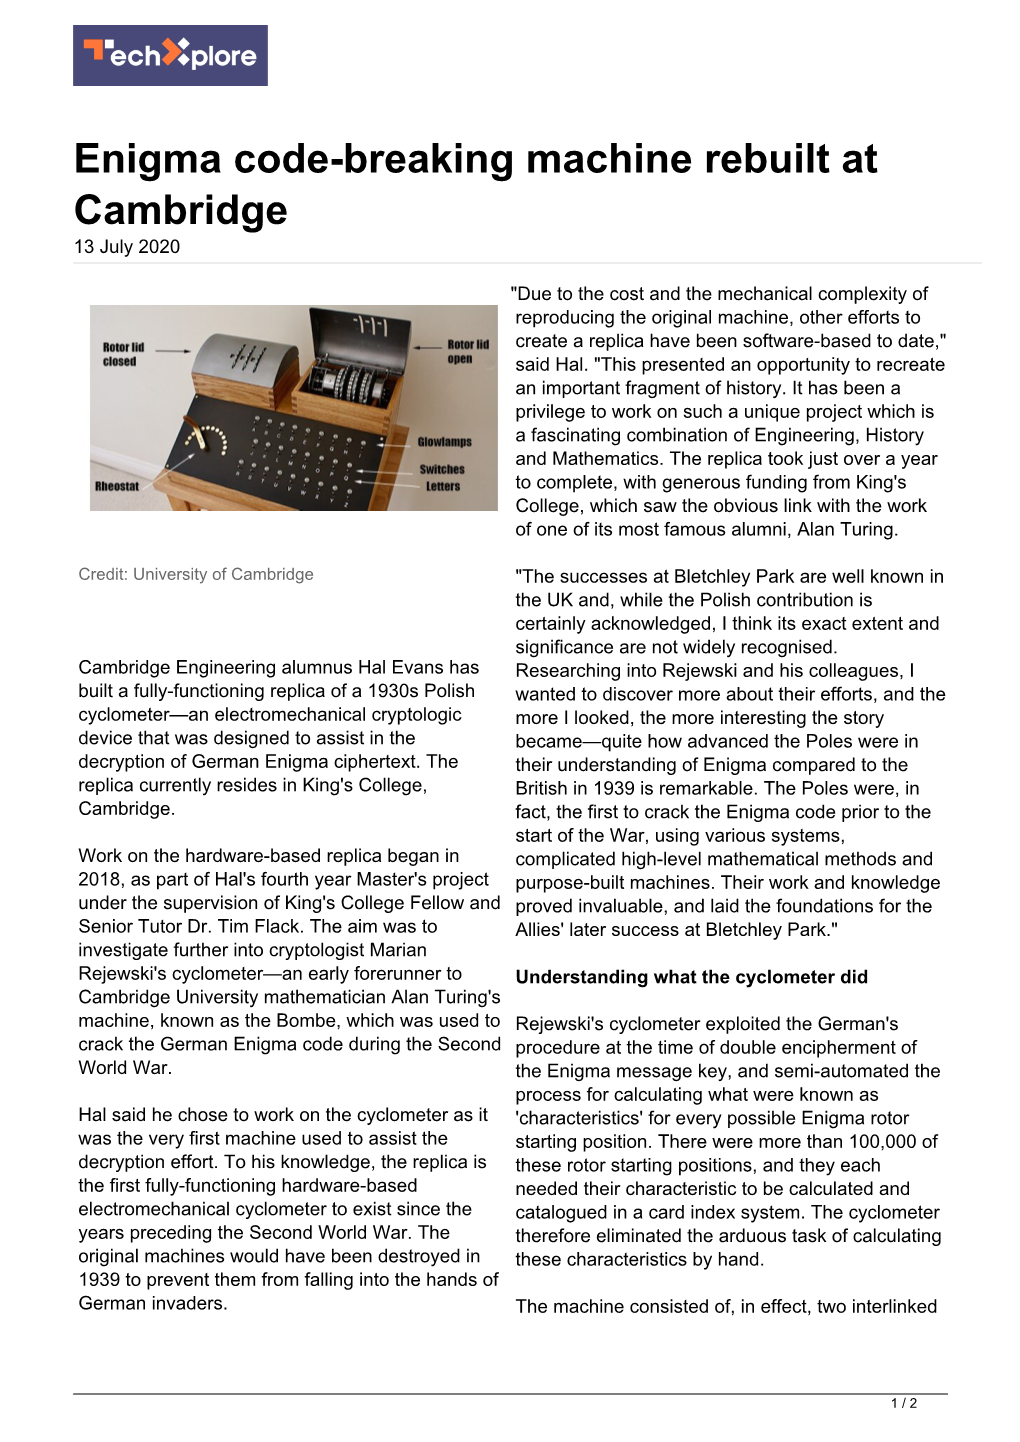 Enigma Code-Breaking Machine Rebuilt at Cambridge 13 July 2020